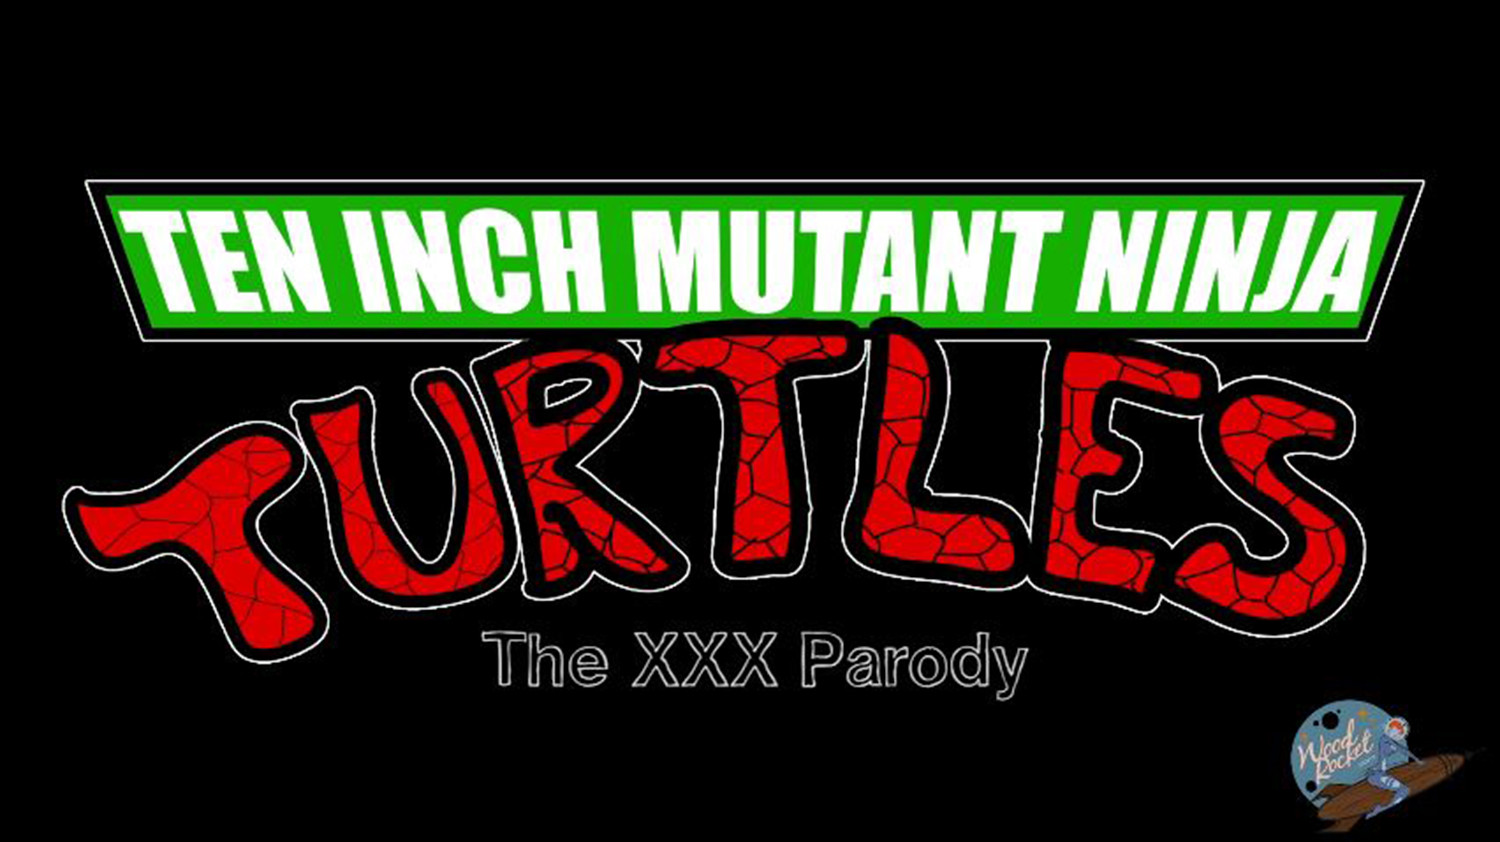 dongatello new ninja turtle porn film leaves viewers shell